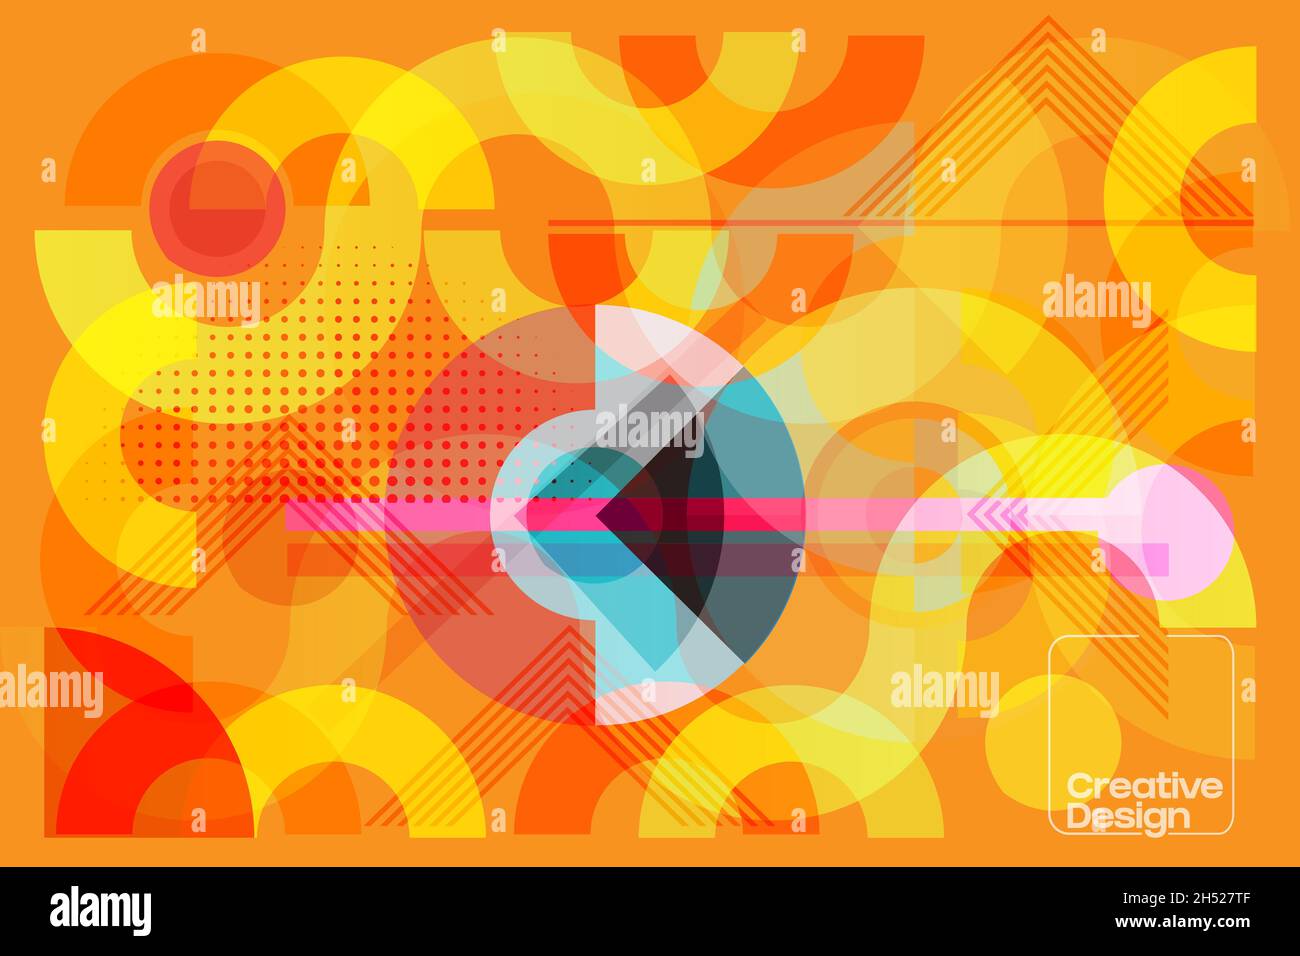 Colorful Fluid circles and curve shape geometric vector EPS illustration creative design. Stock Vector